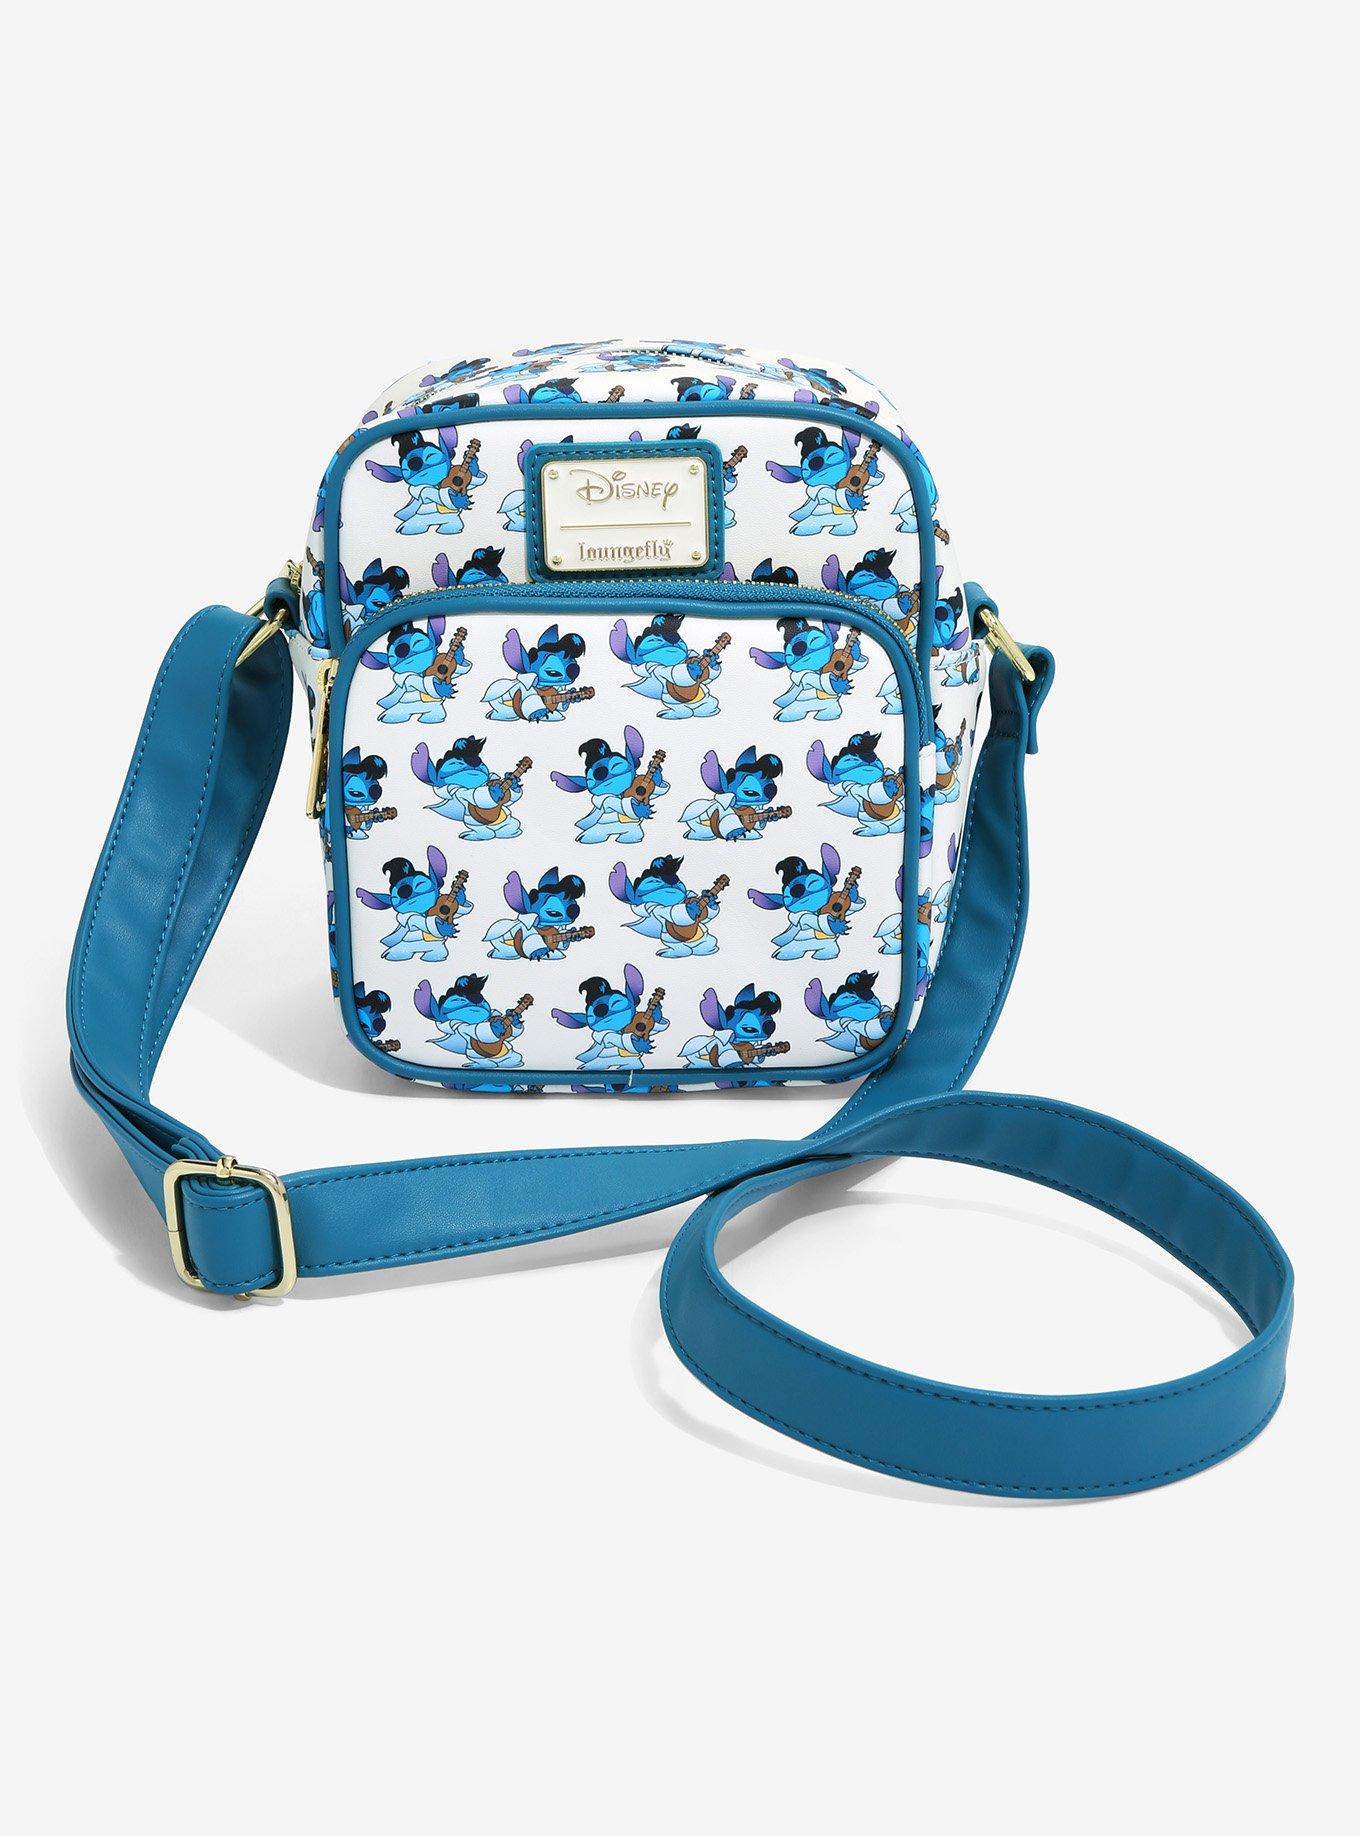 Stitch Crossbody Bag by Loungefly